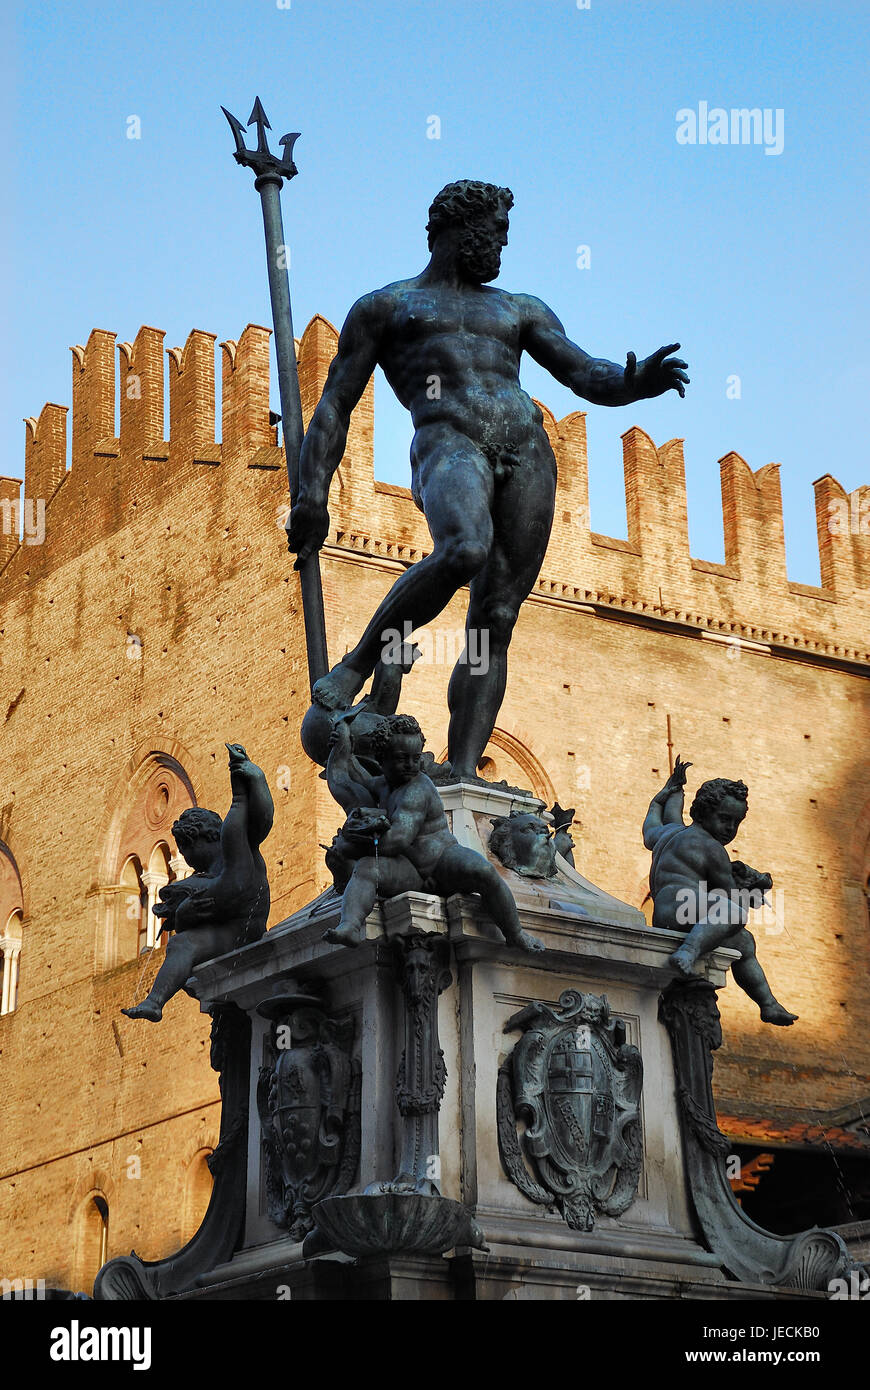 Bologna, Italy. The Fountain of Neptune (Italian: Fontana di Nettuno) is a  monumental civic fountain located in the eponymous square, Piazza del  Nettuno, next to Piazza Maggiore. The fountain is called The